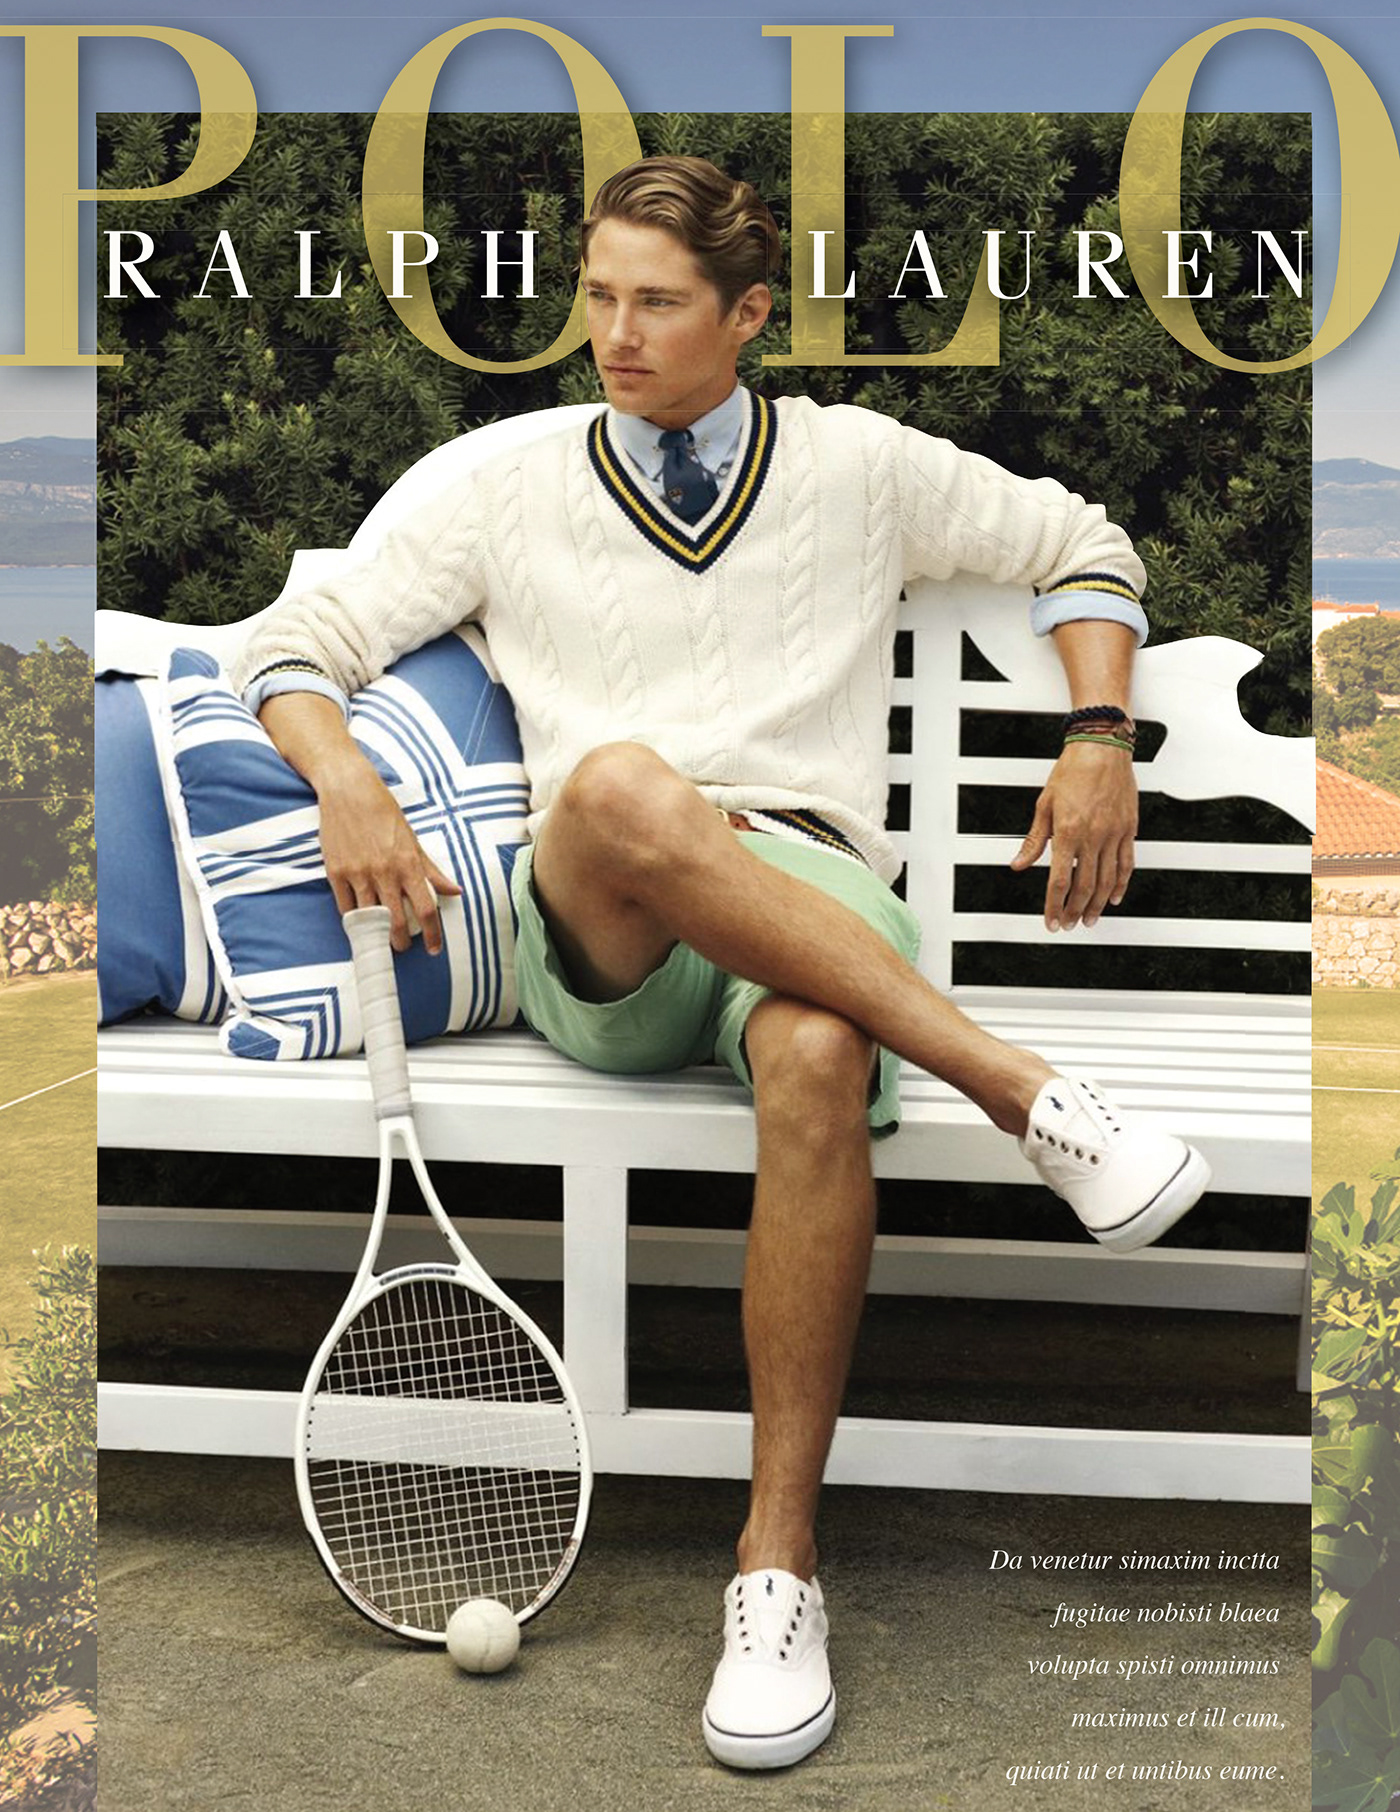 Ralph Lauren Concept Ad | Behance